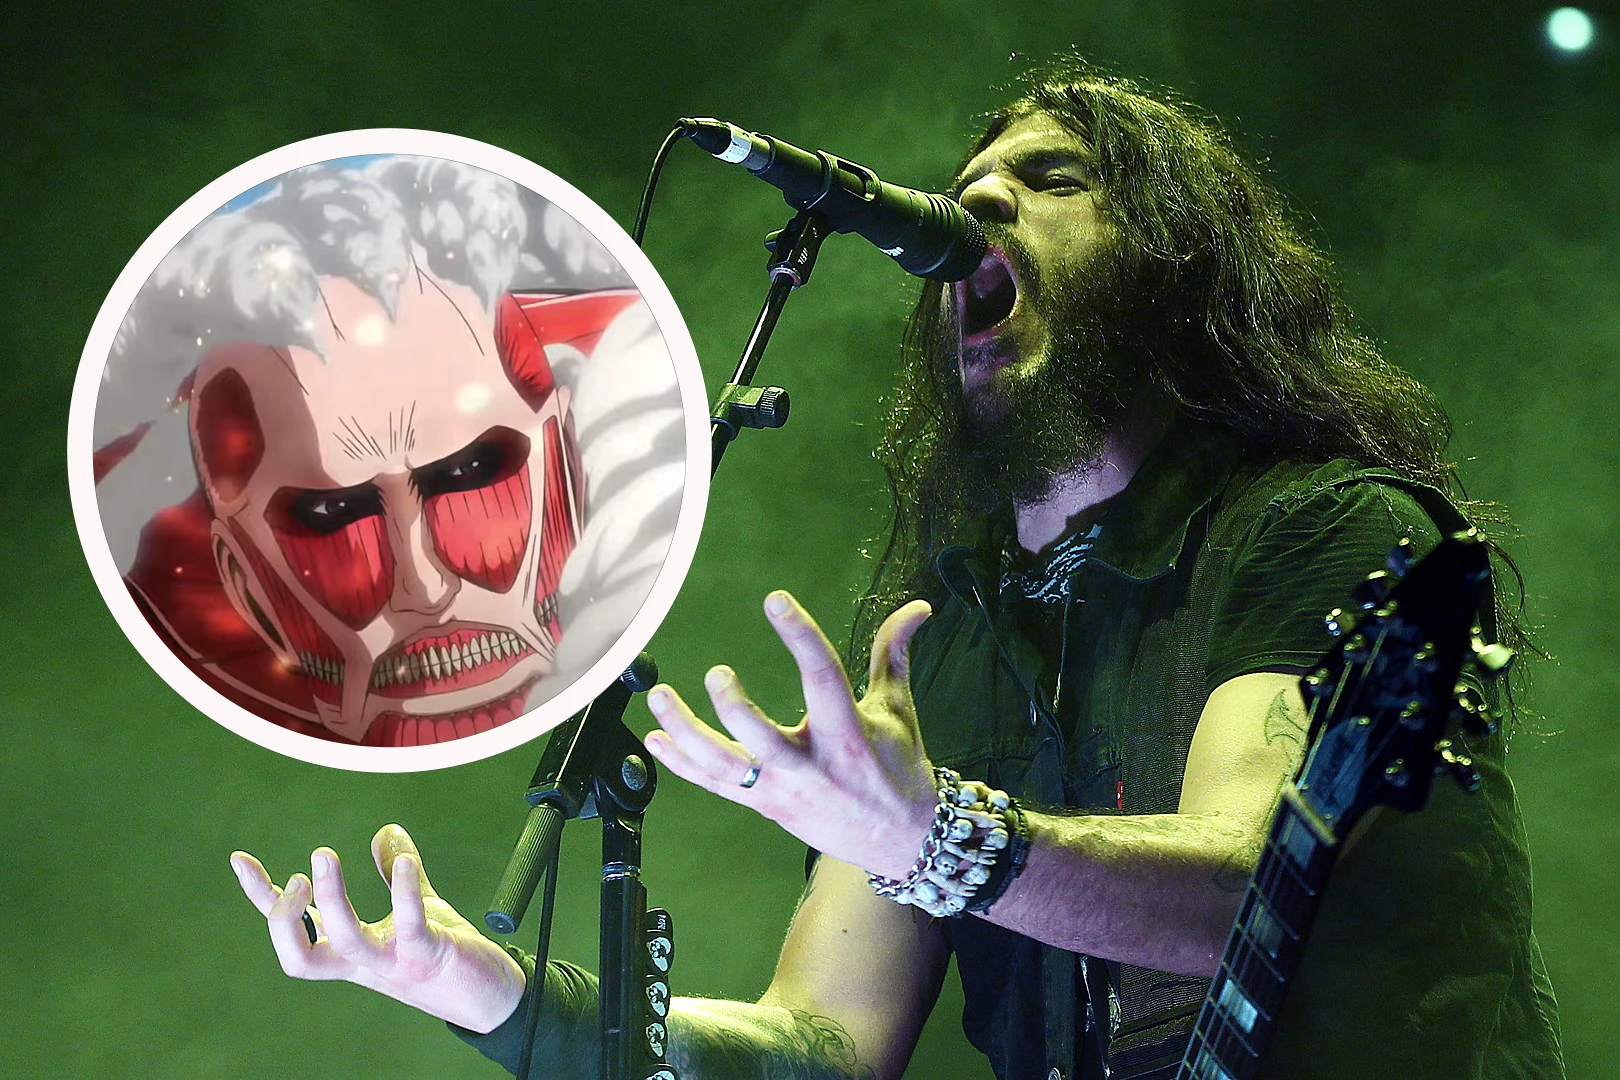 Robb Says My Chemical Romance Inspired the New Machine Head Album